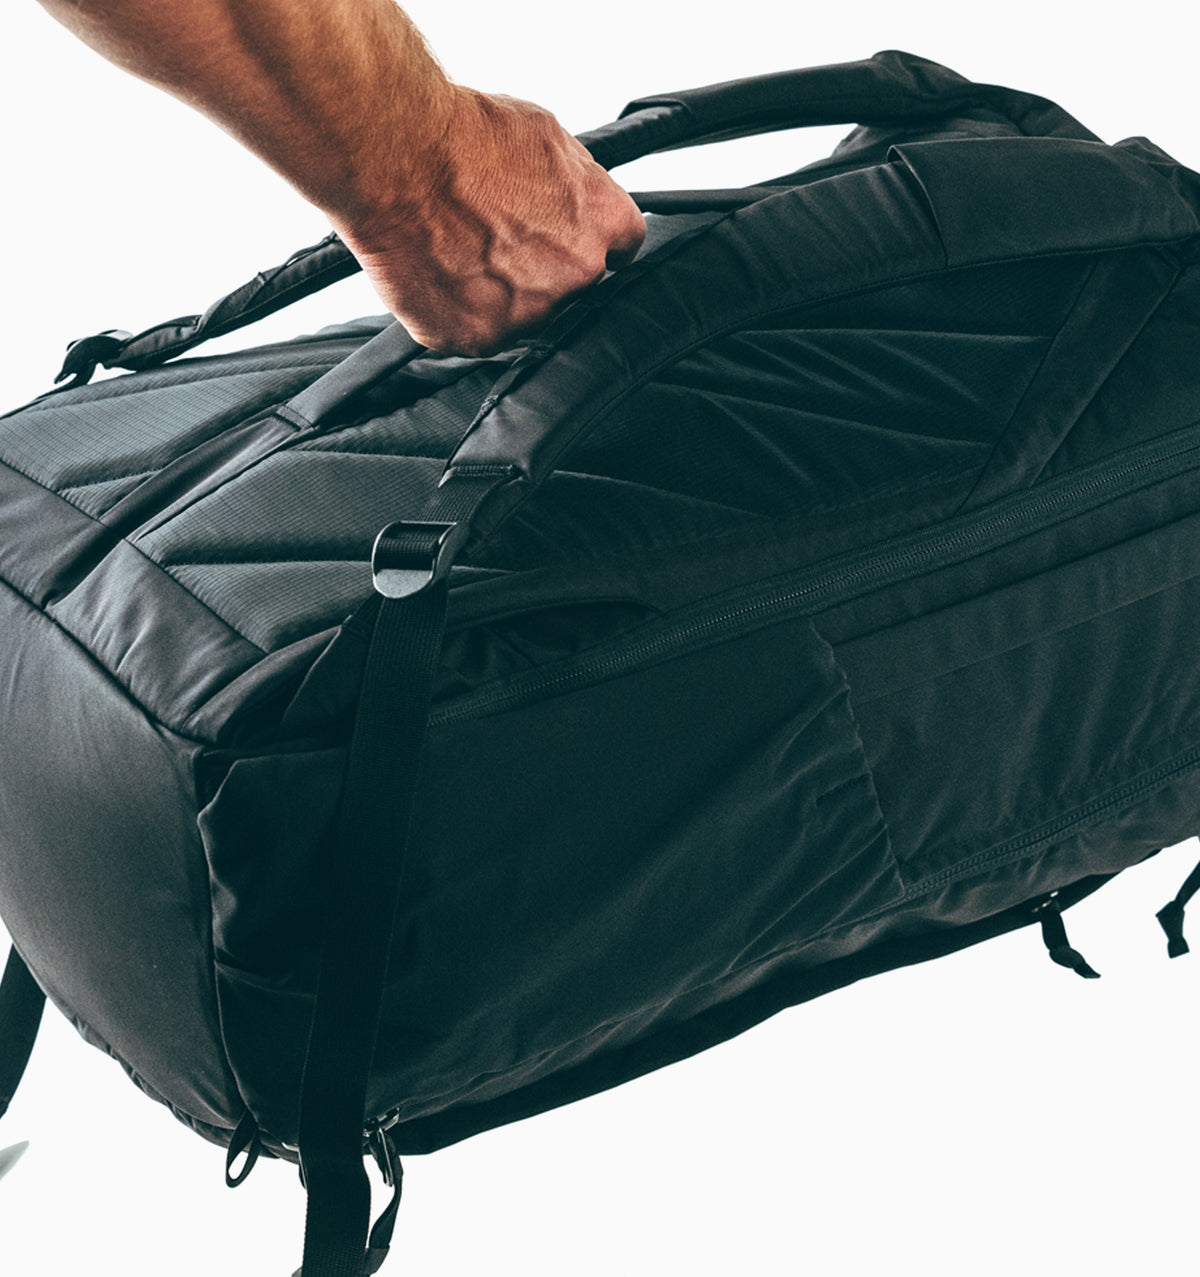 Evergoods 17" Civic Travel Bag 35L - Solution Black